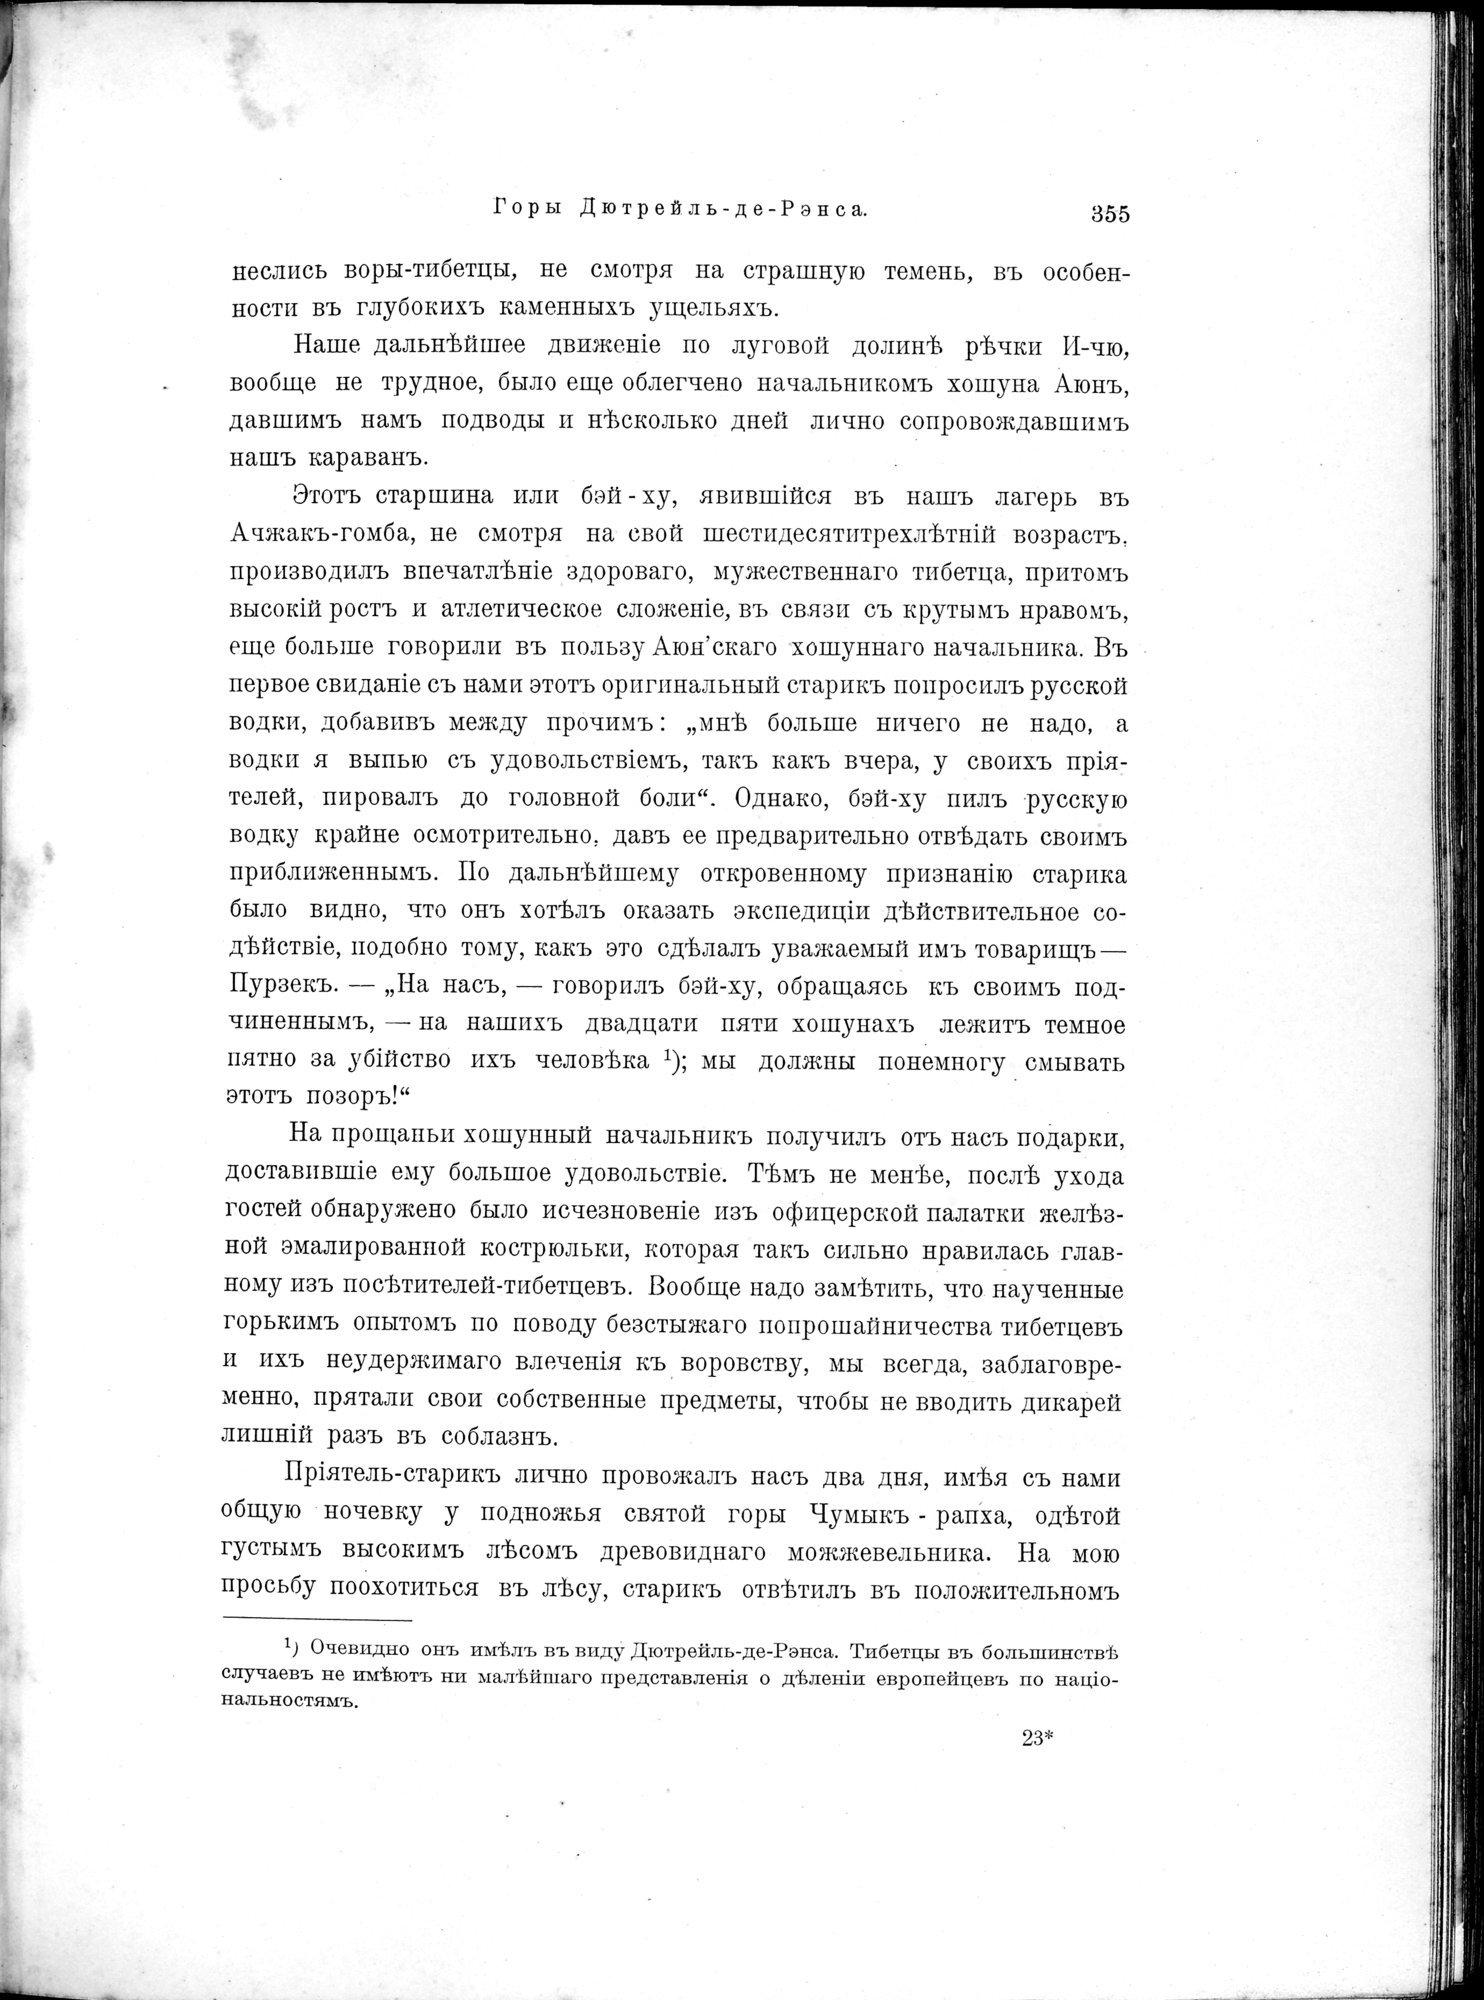 Mongoliia i Kam : vol.2 / Page 137 (Grayscale High Resolution Image)